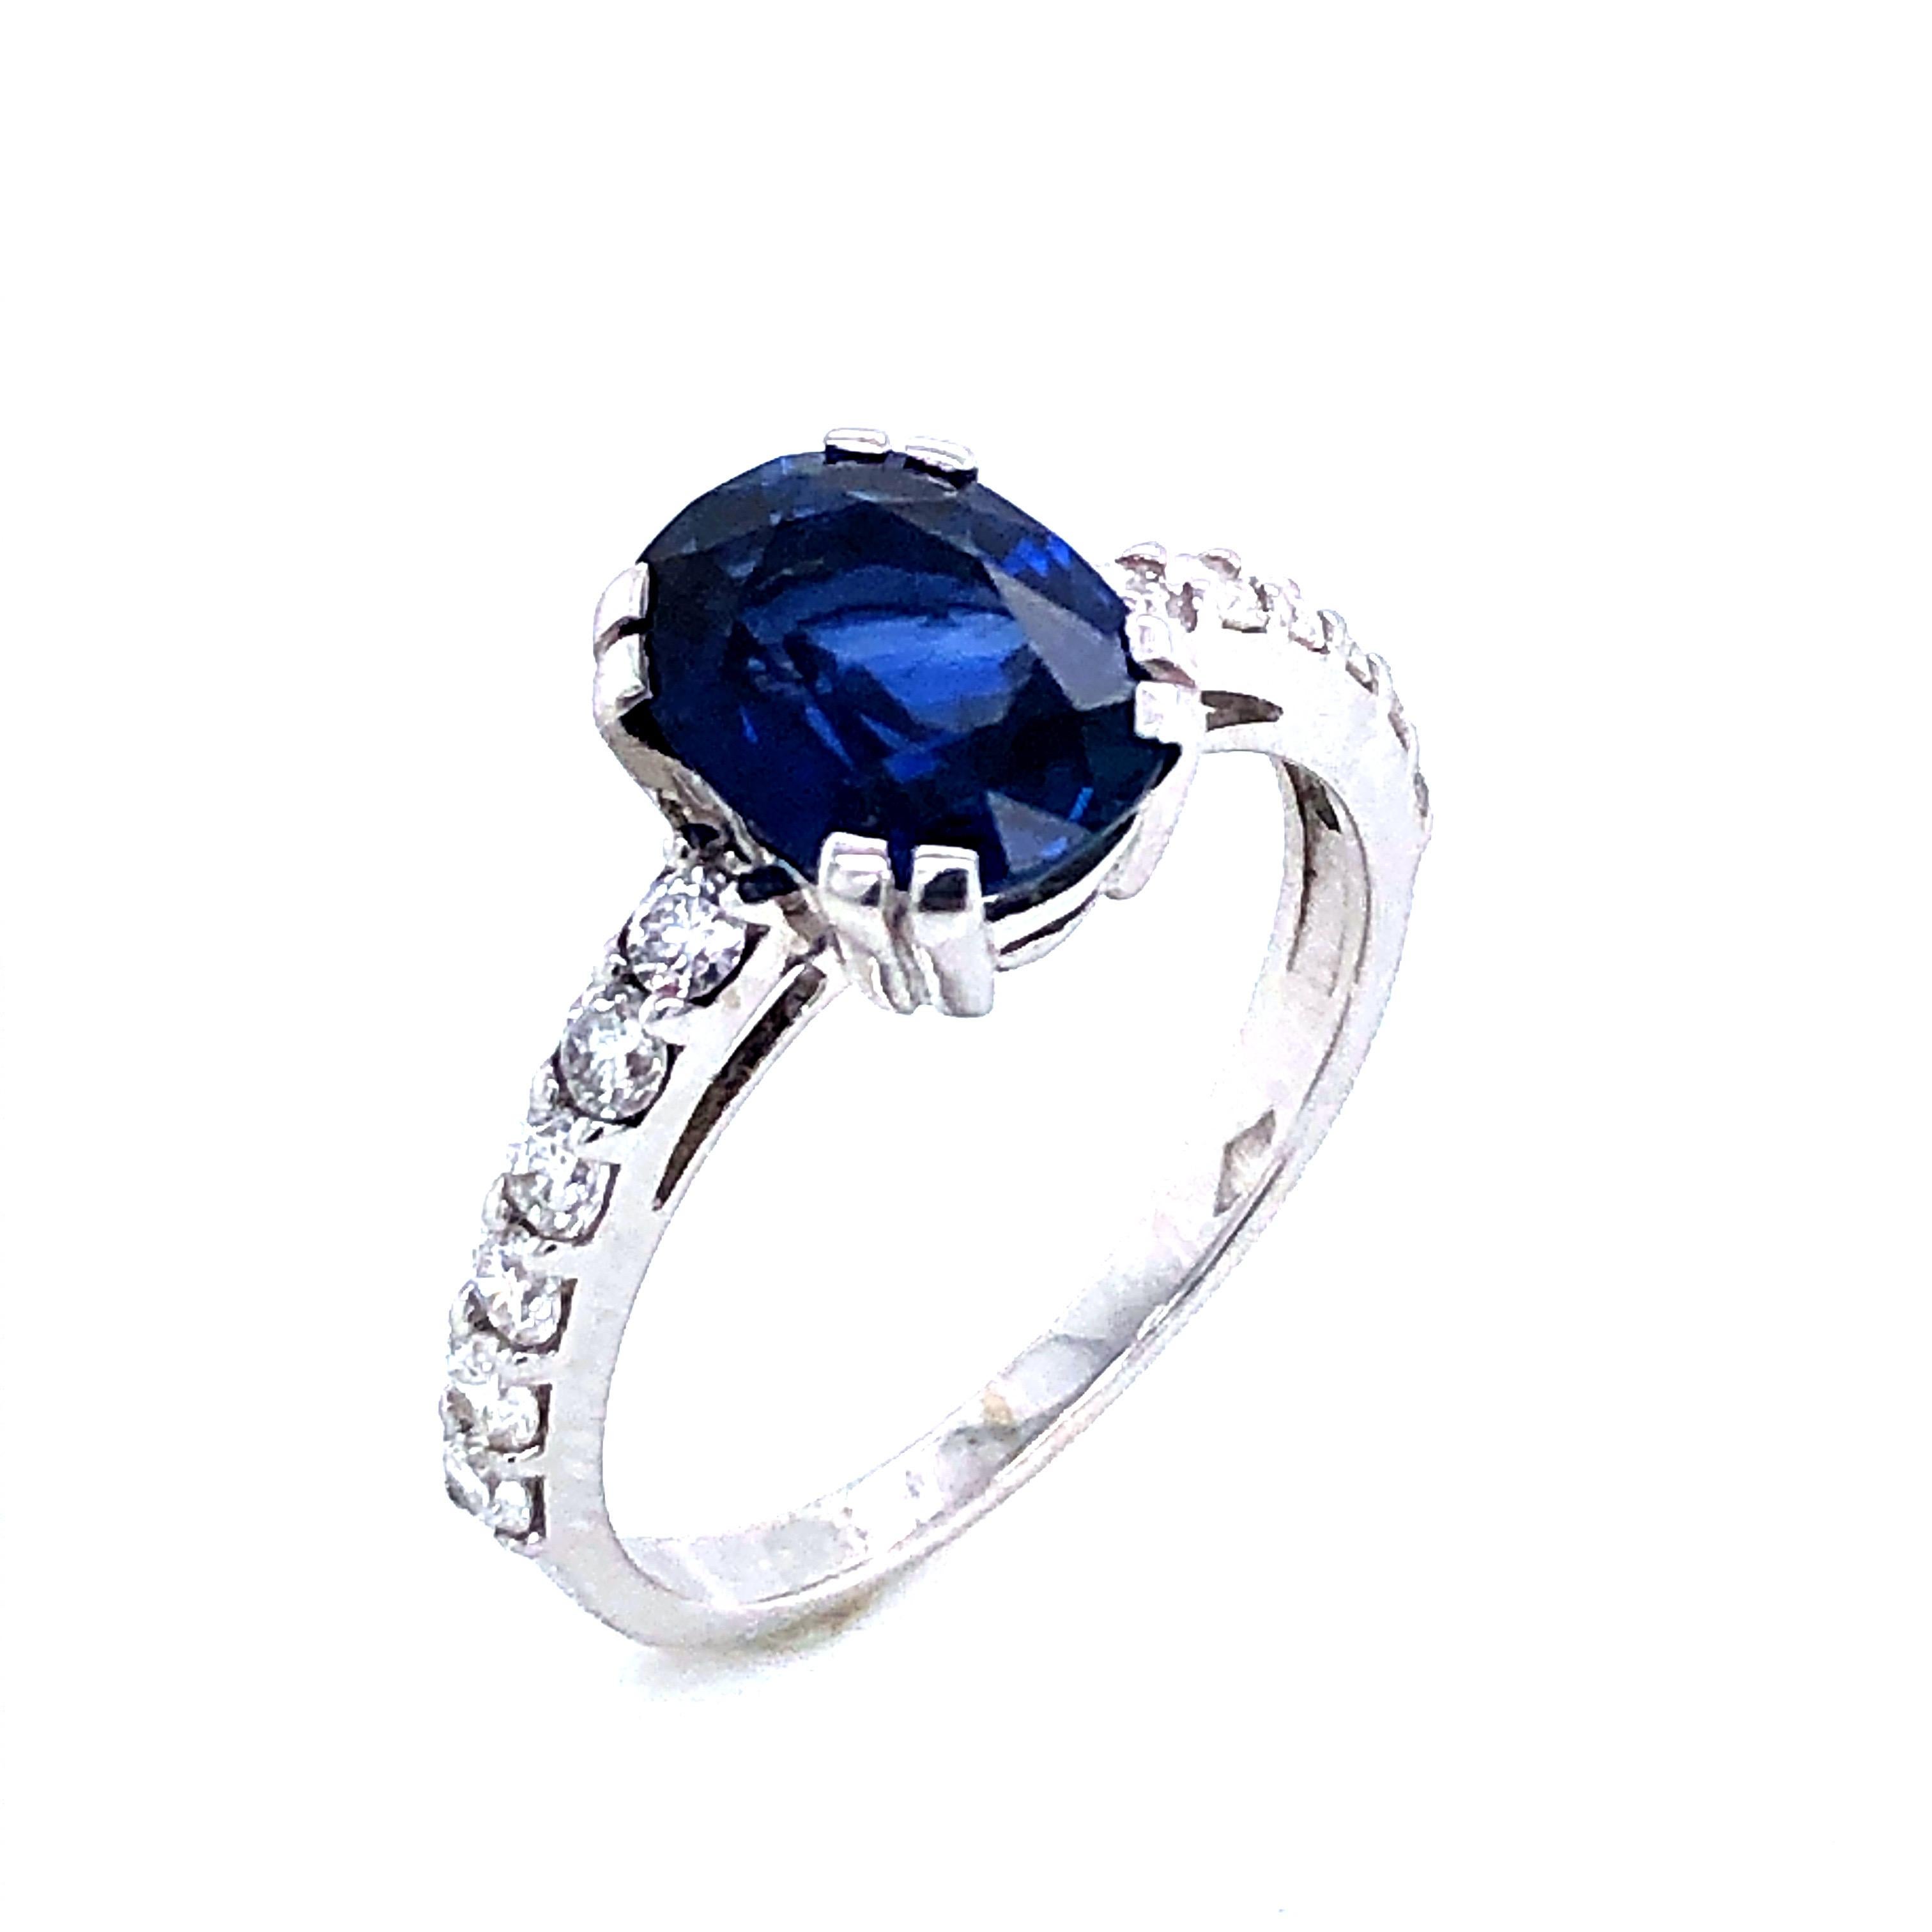 Oval Cut Blue Sapphire Ceylan and Diamonds on White Gold 18 Karat